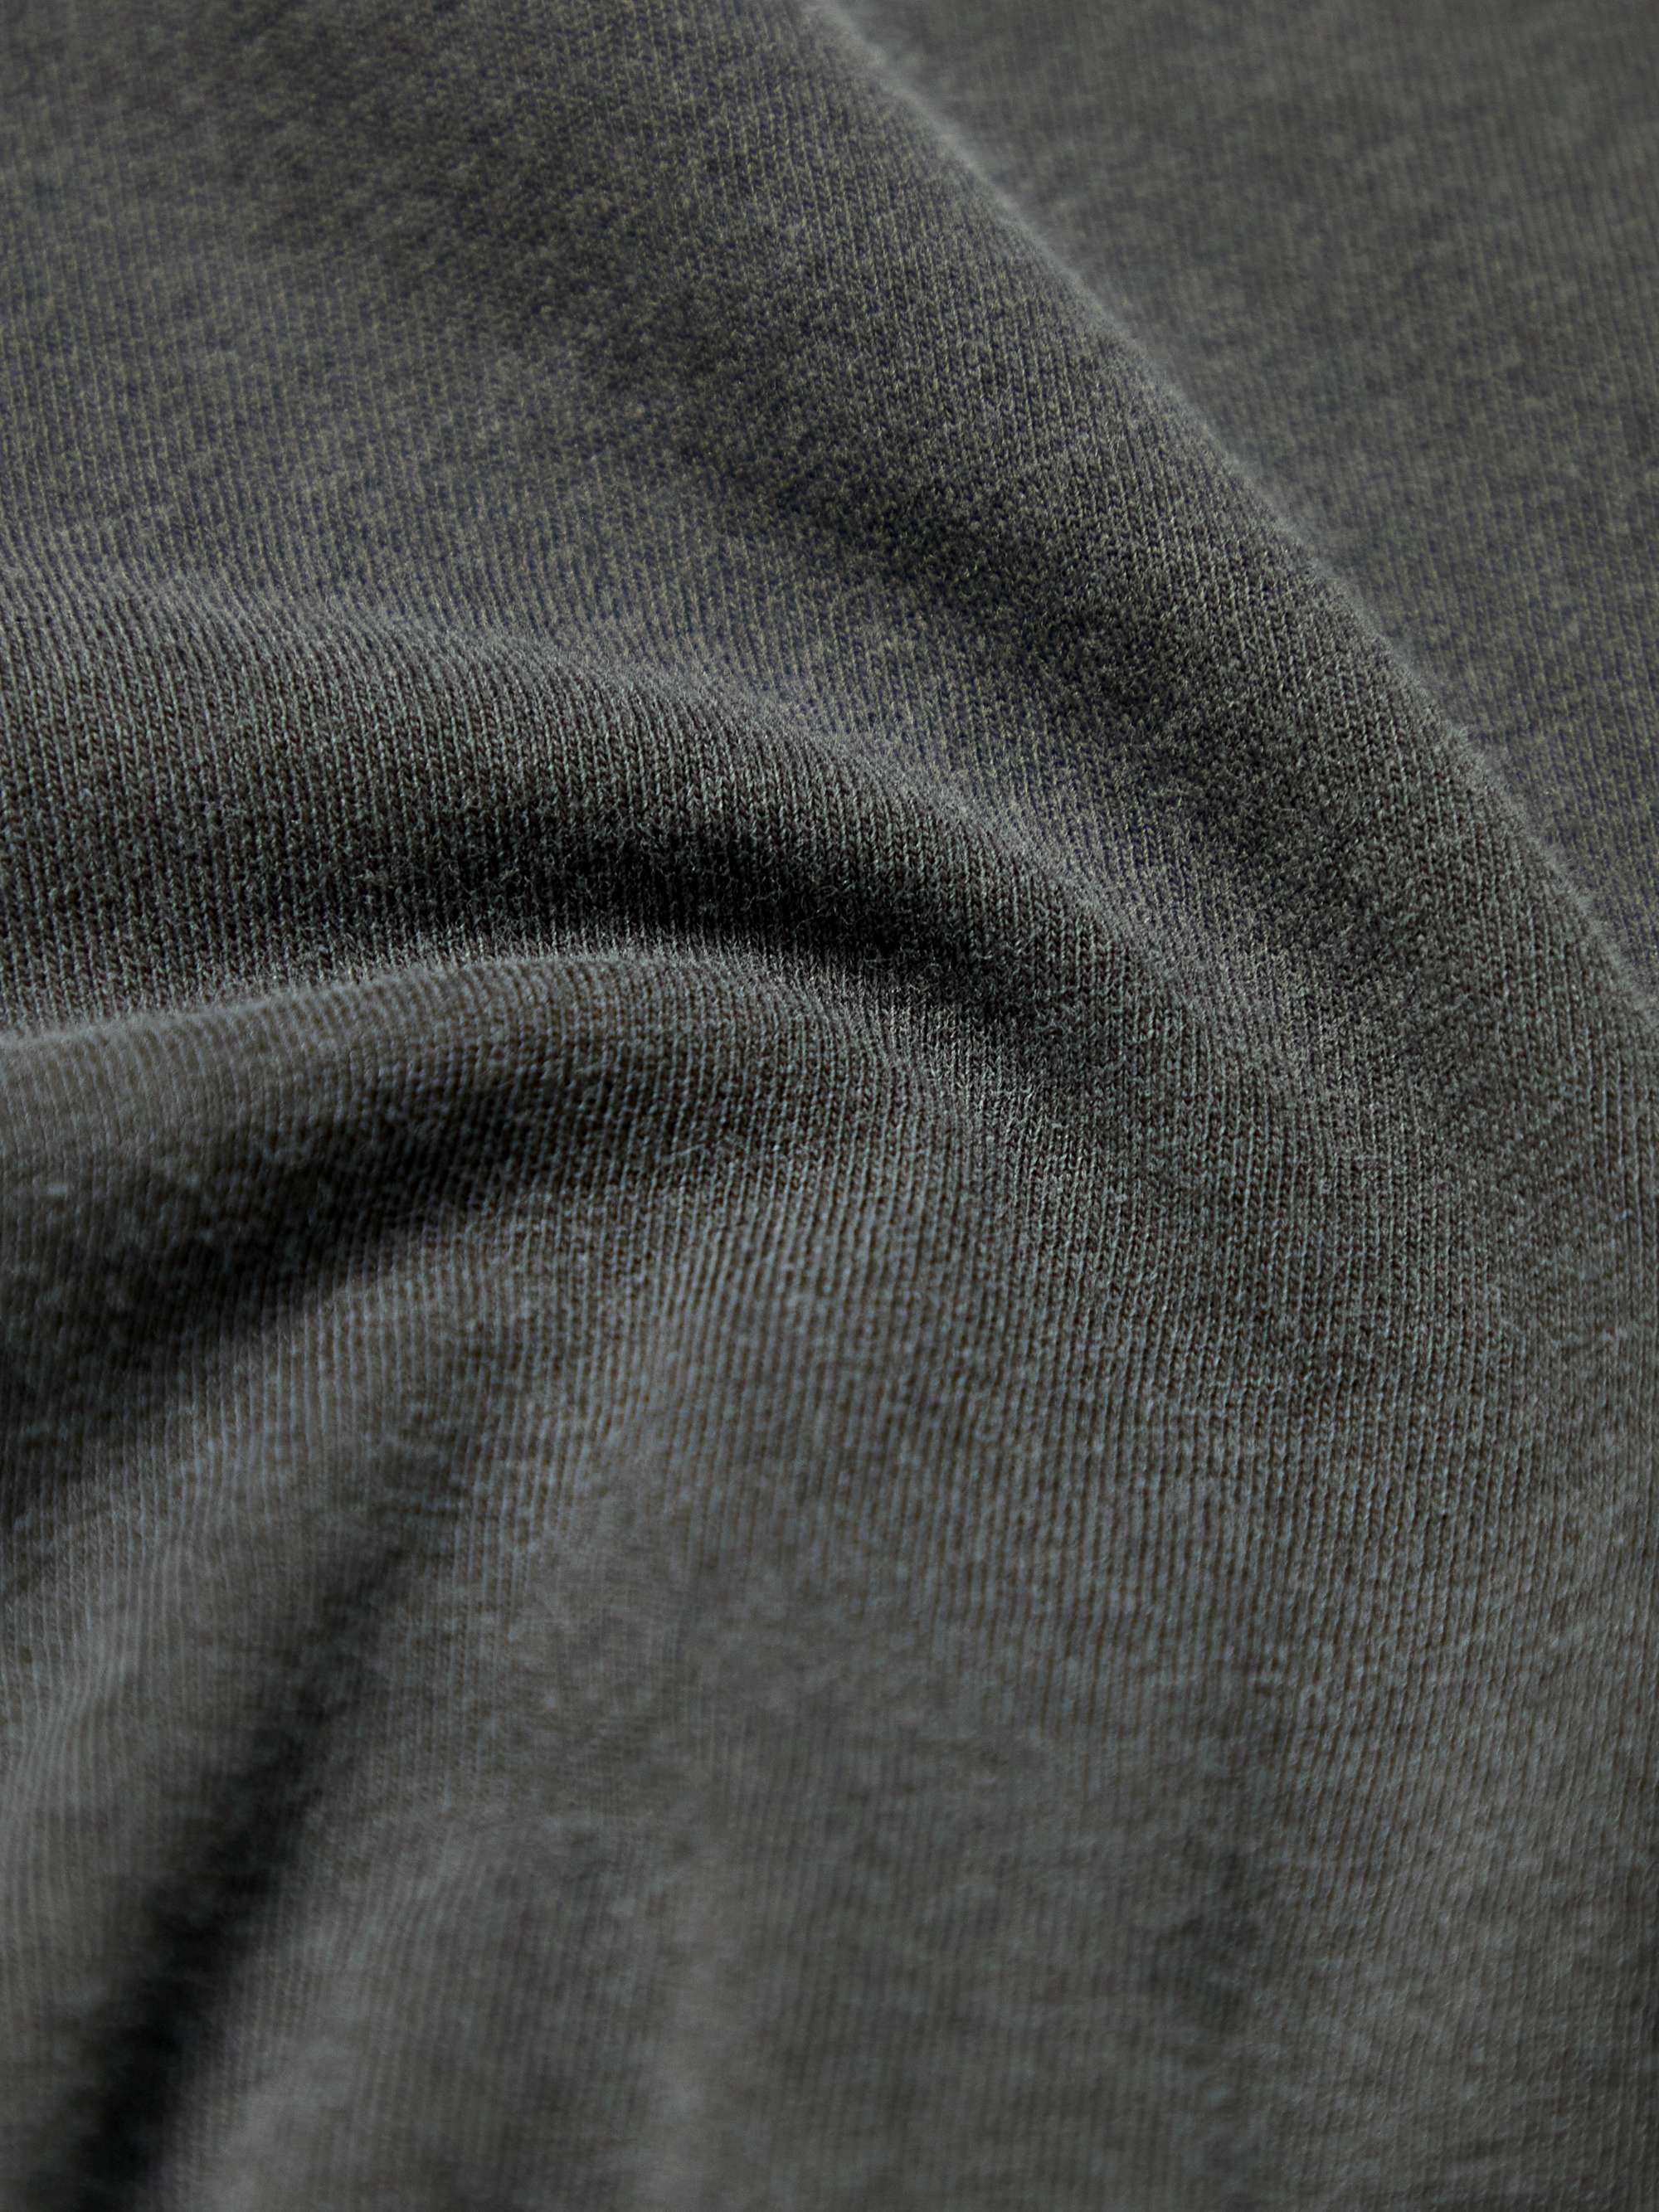 JAMES PERSE Garment-Dyed Cotton-Jersey T-Shirt